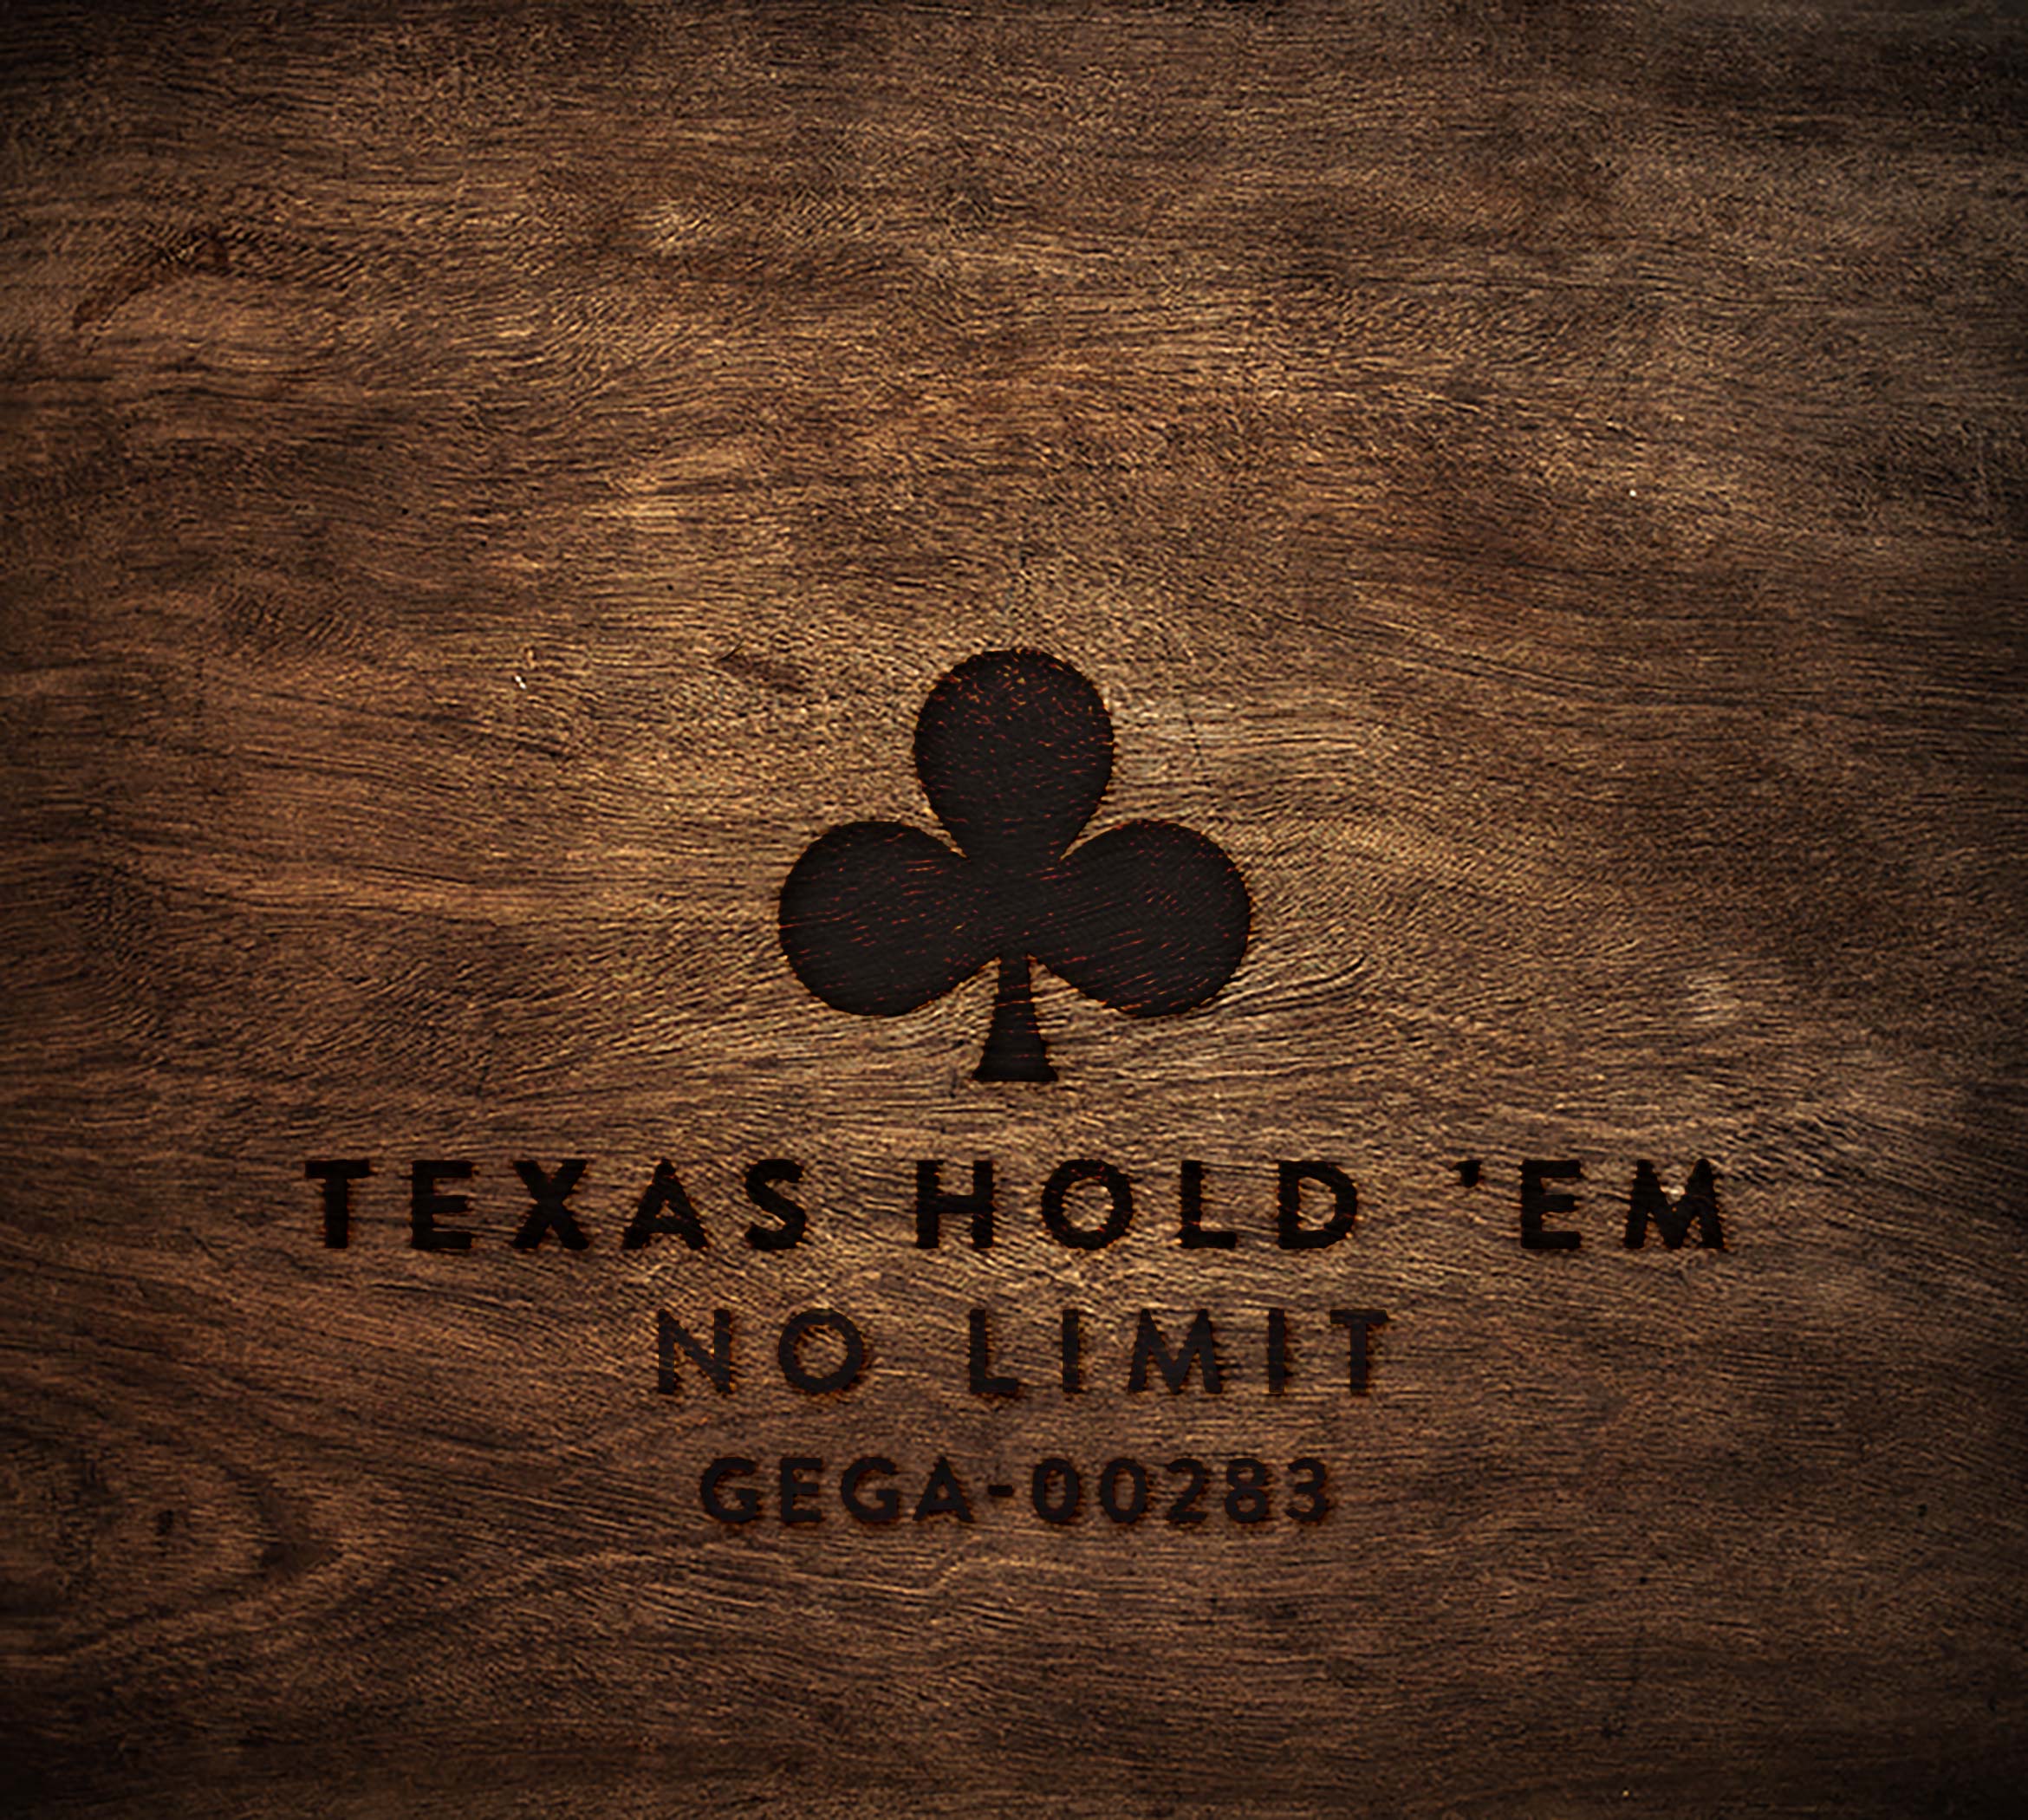 Texas Hold 'Em No Limit GEGA-00283 wood square